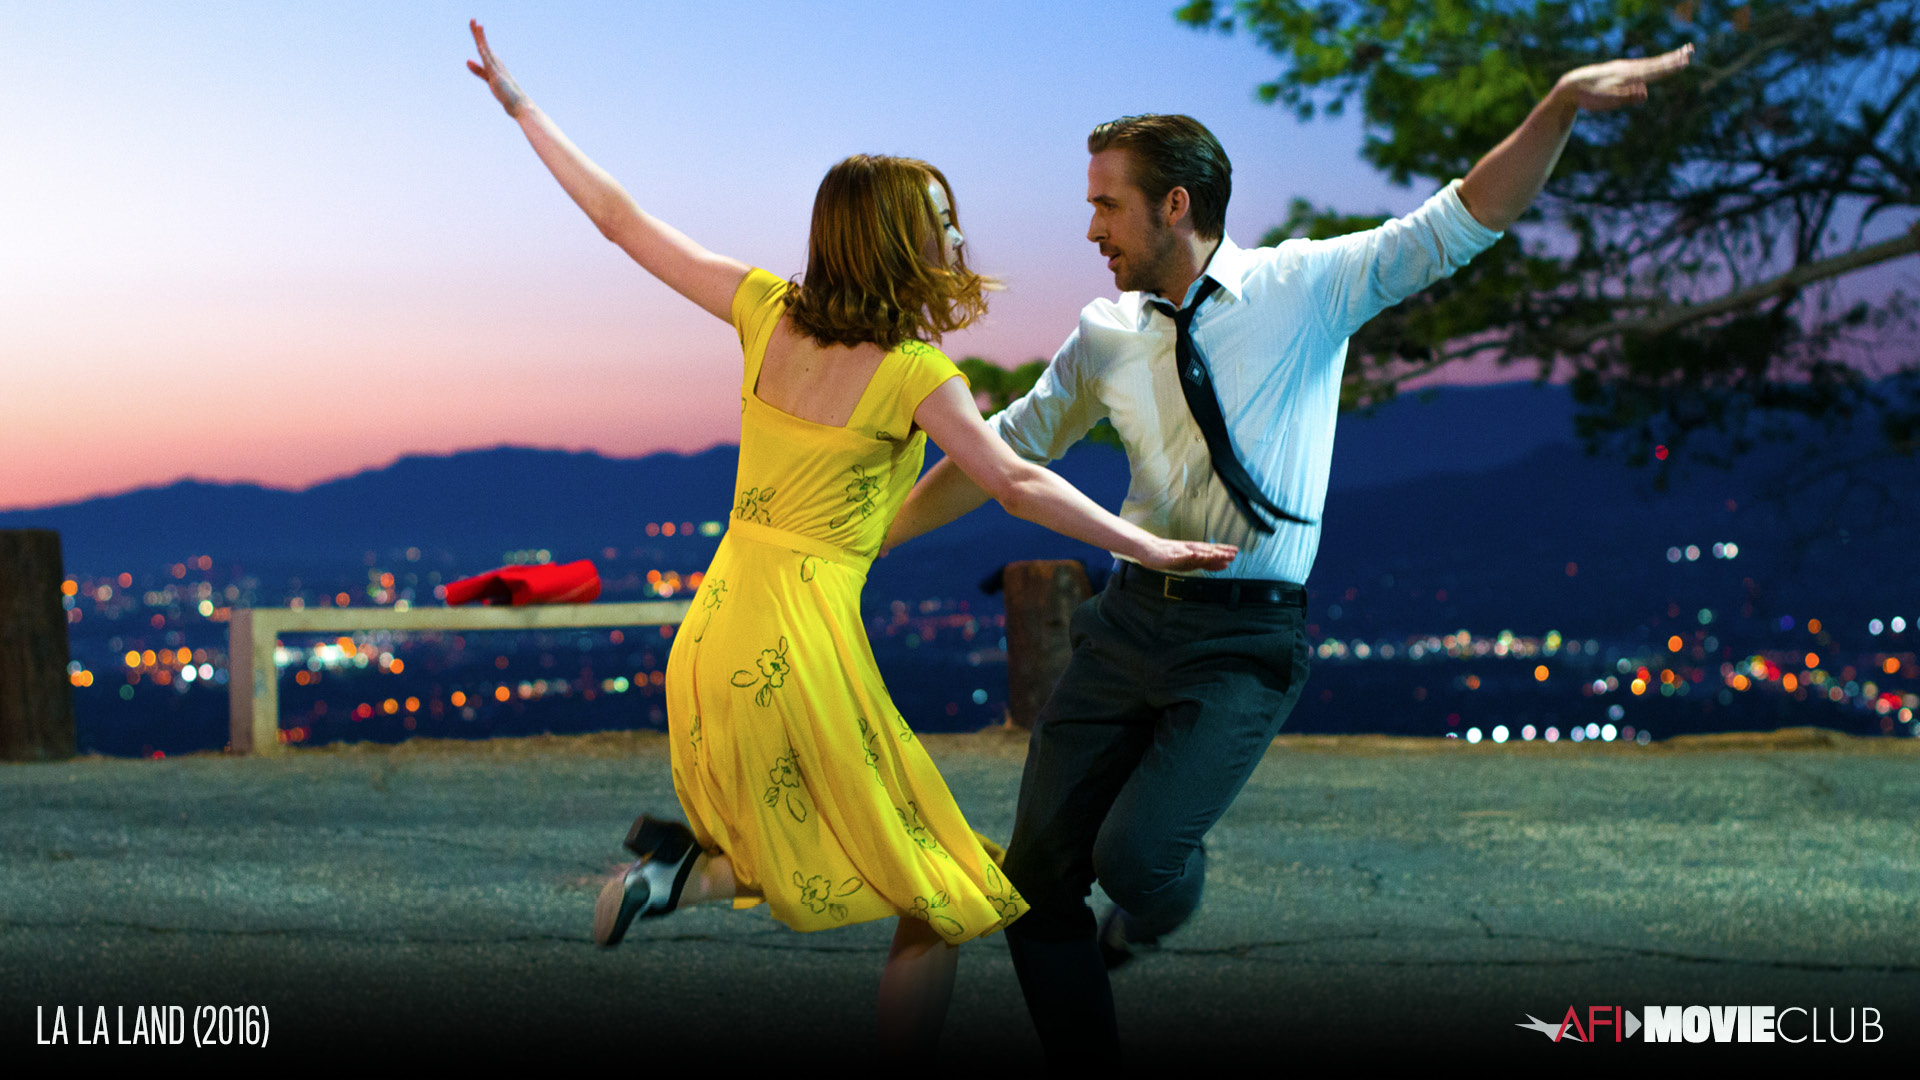 La La Land Film Still - Ryan Gosling and Emma Stone